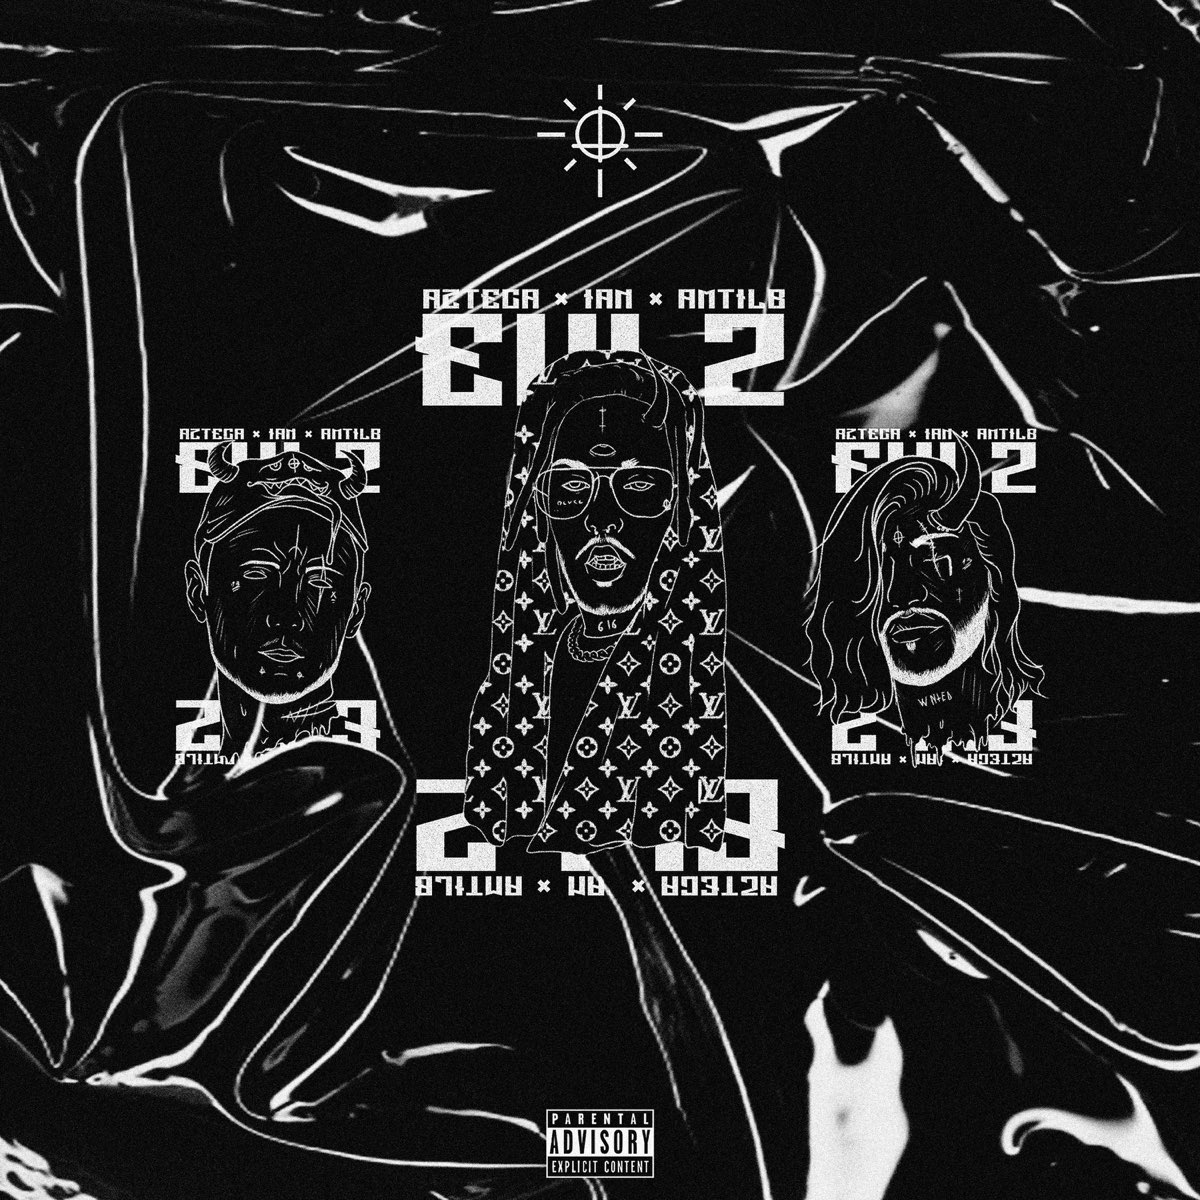 Eul 2 (feat. Ian & Amtilb) - Single - Album by Azteca - Apple Music